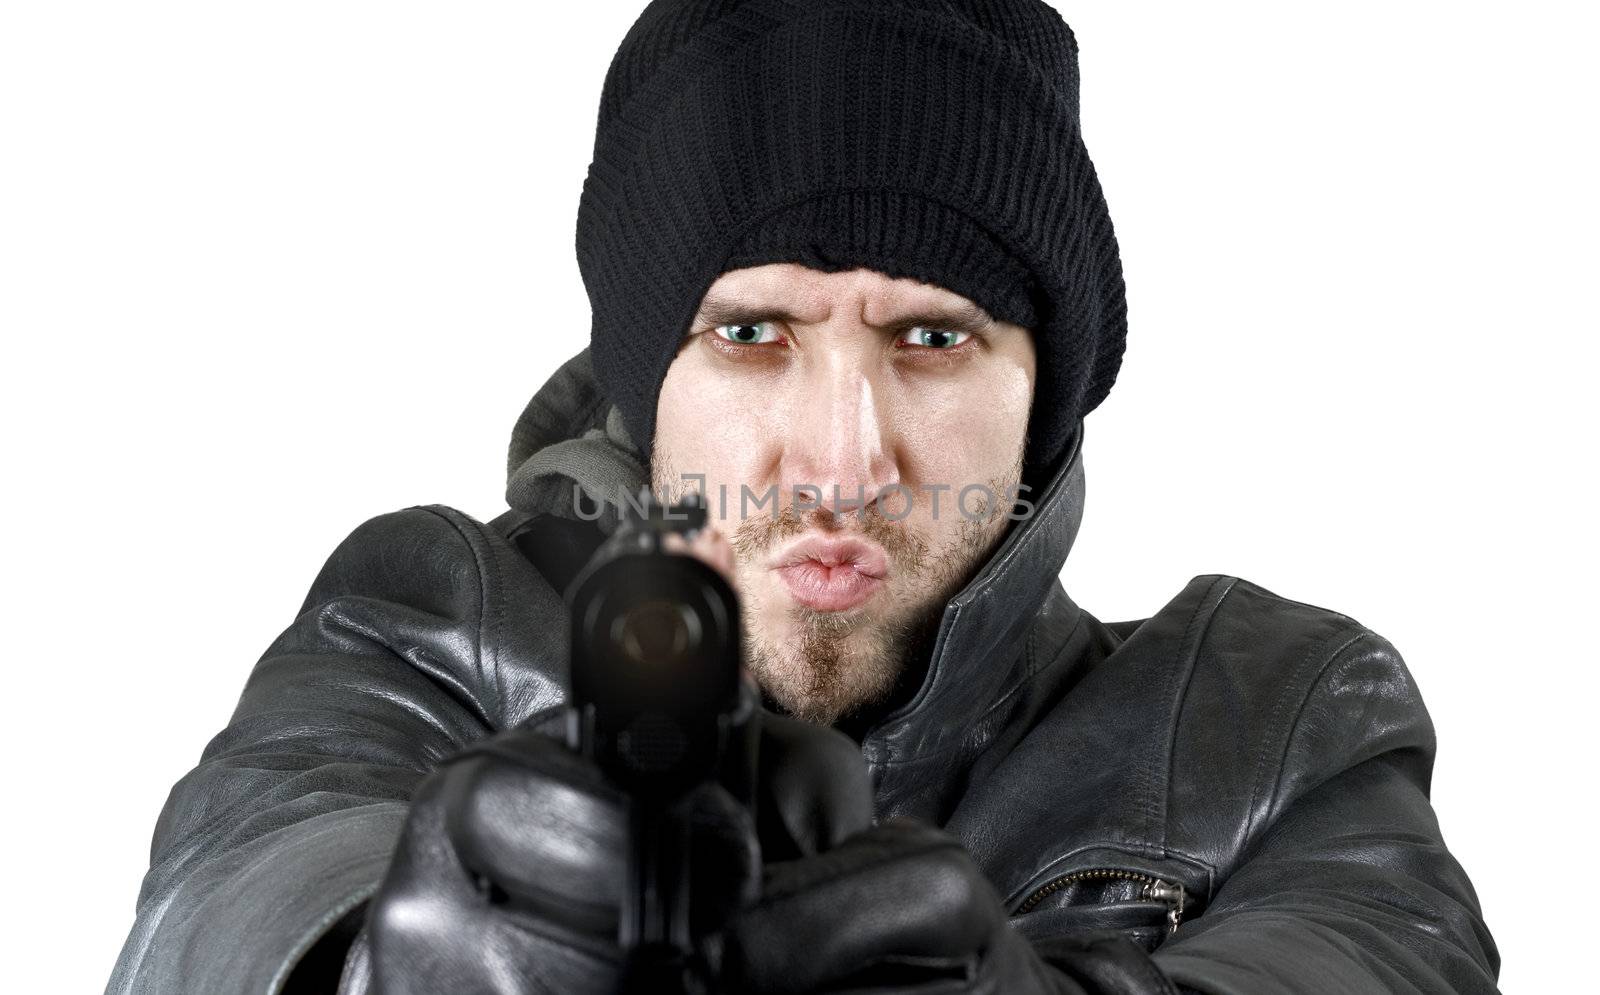 Undercover agent firing gun in the camera by domencolja